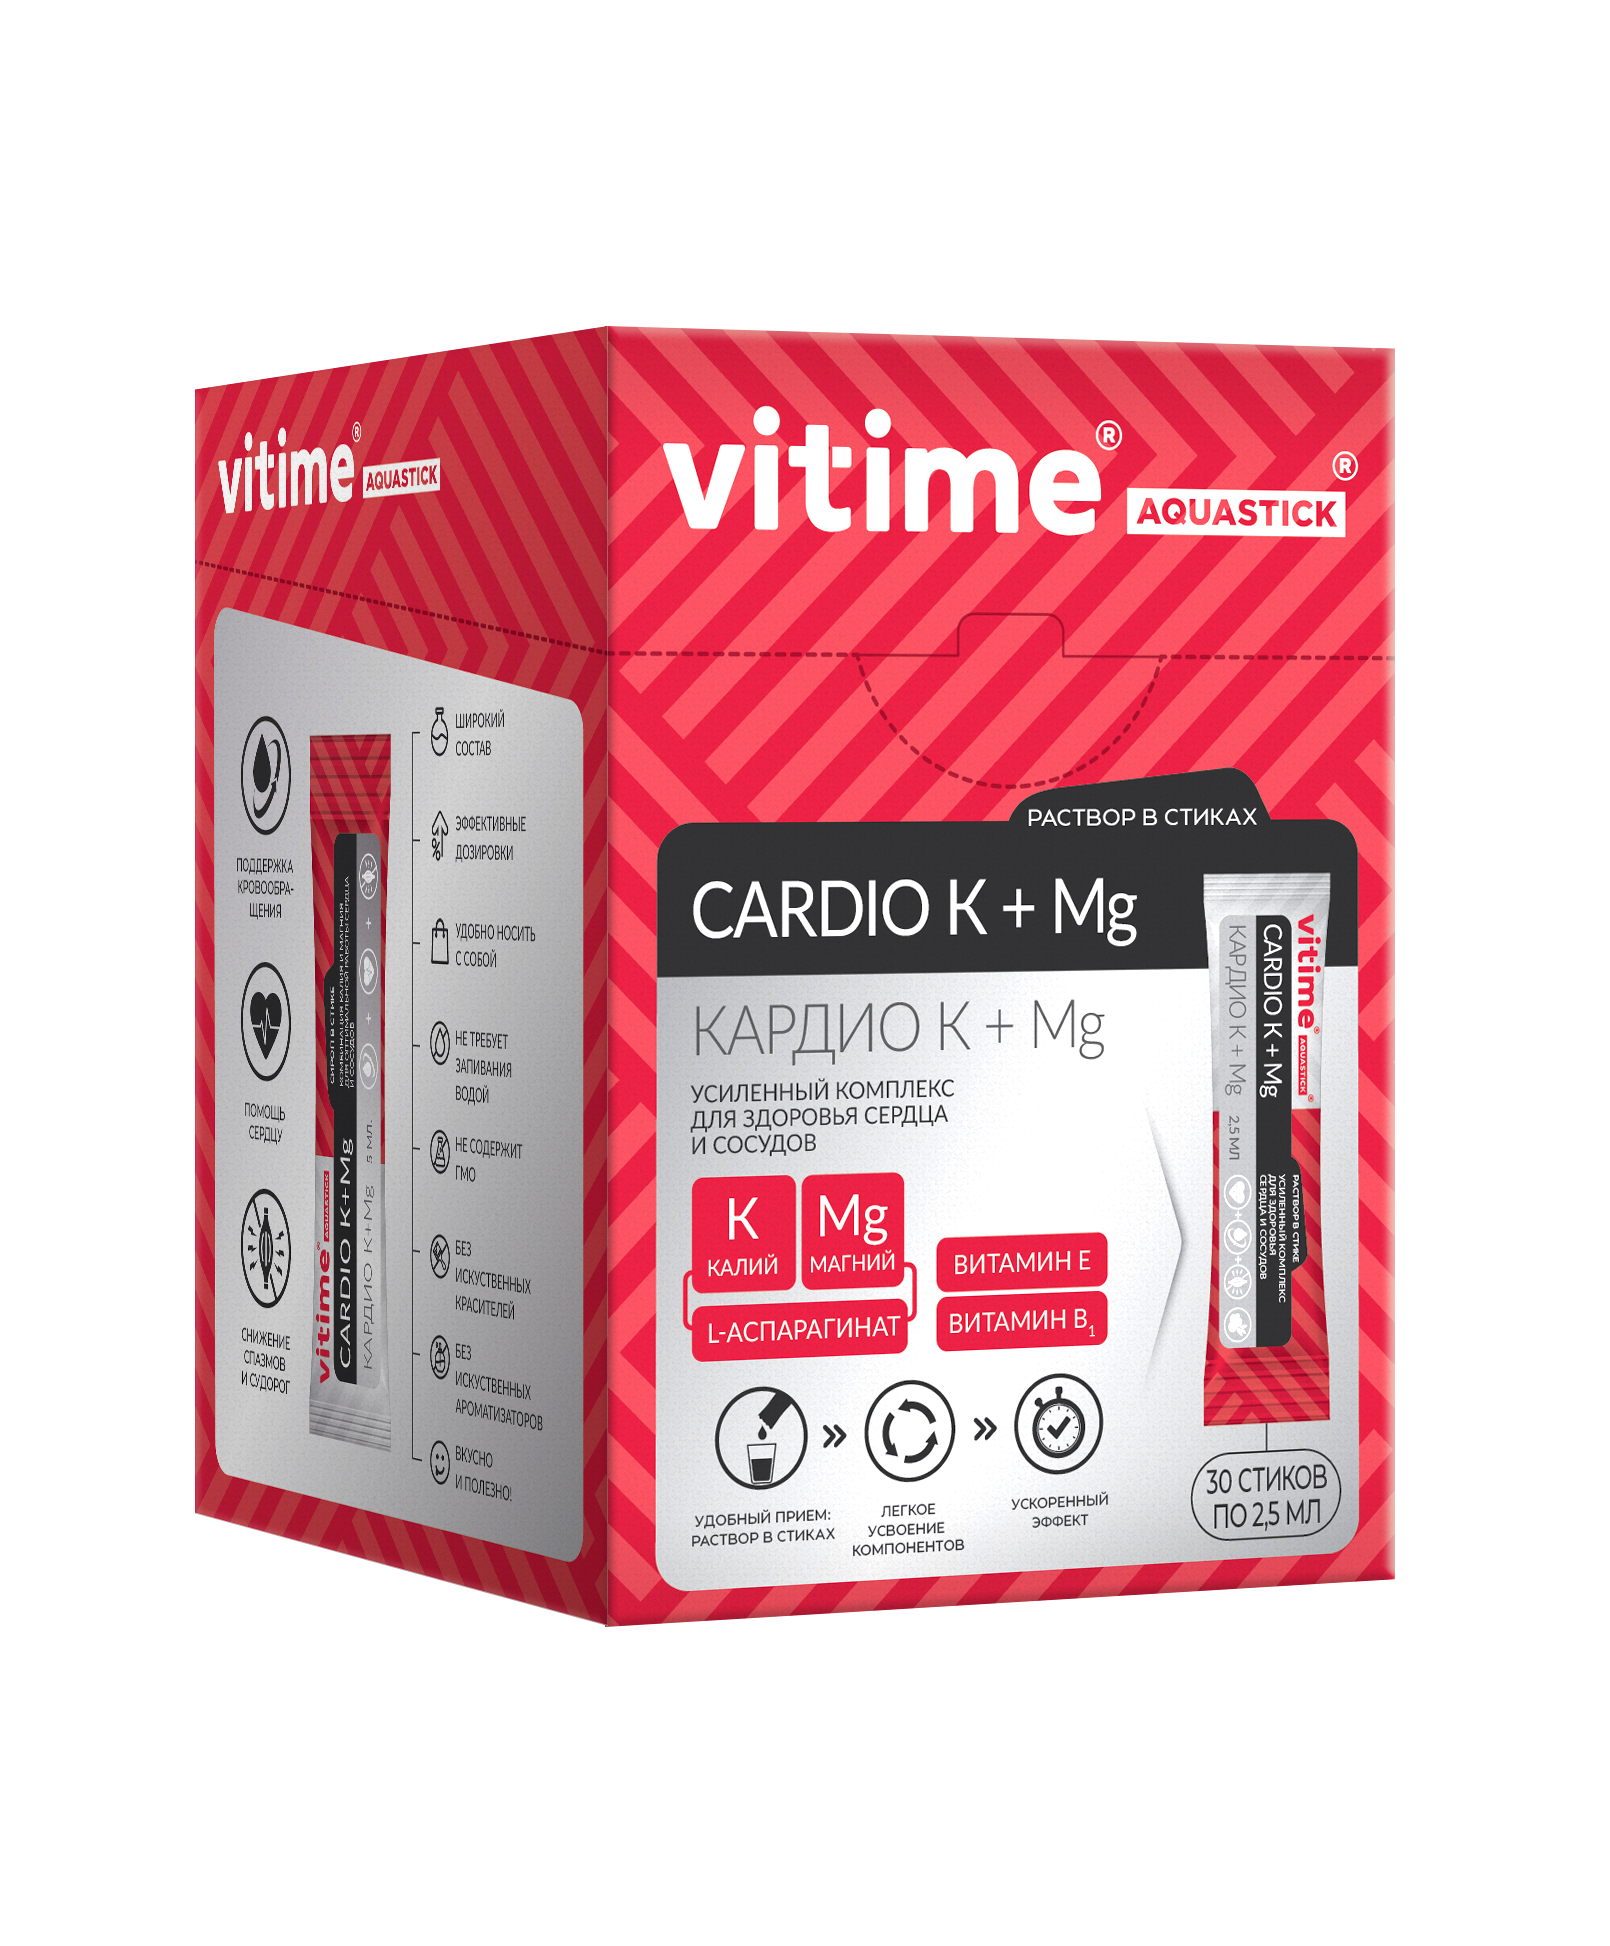 VITime Aquastick Cardio K+Mg р-р стик